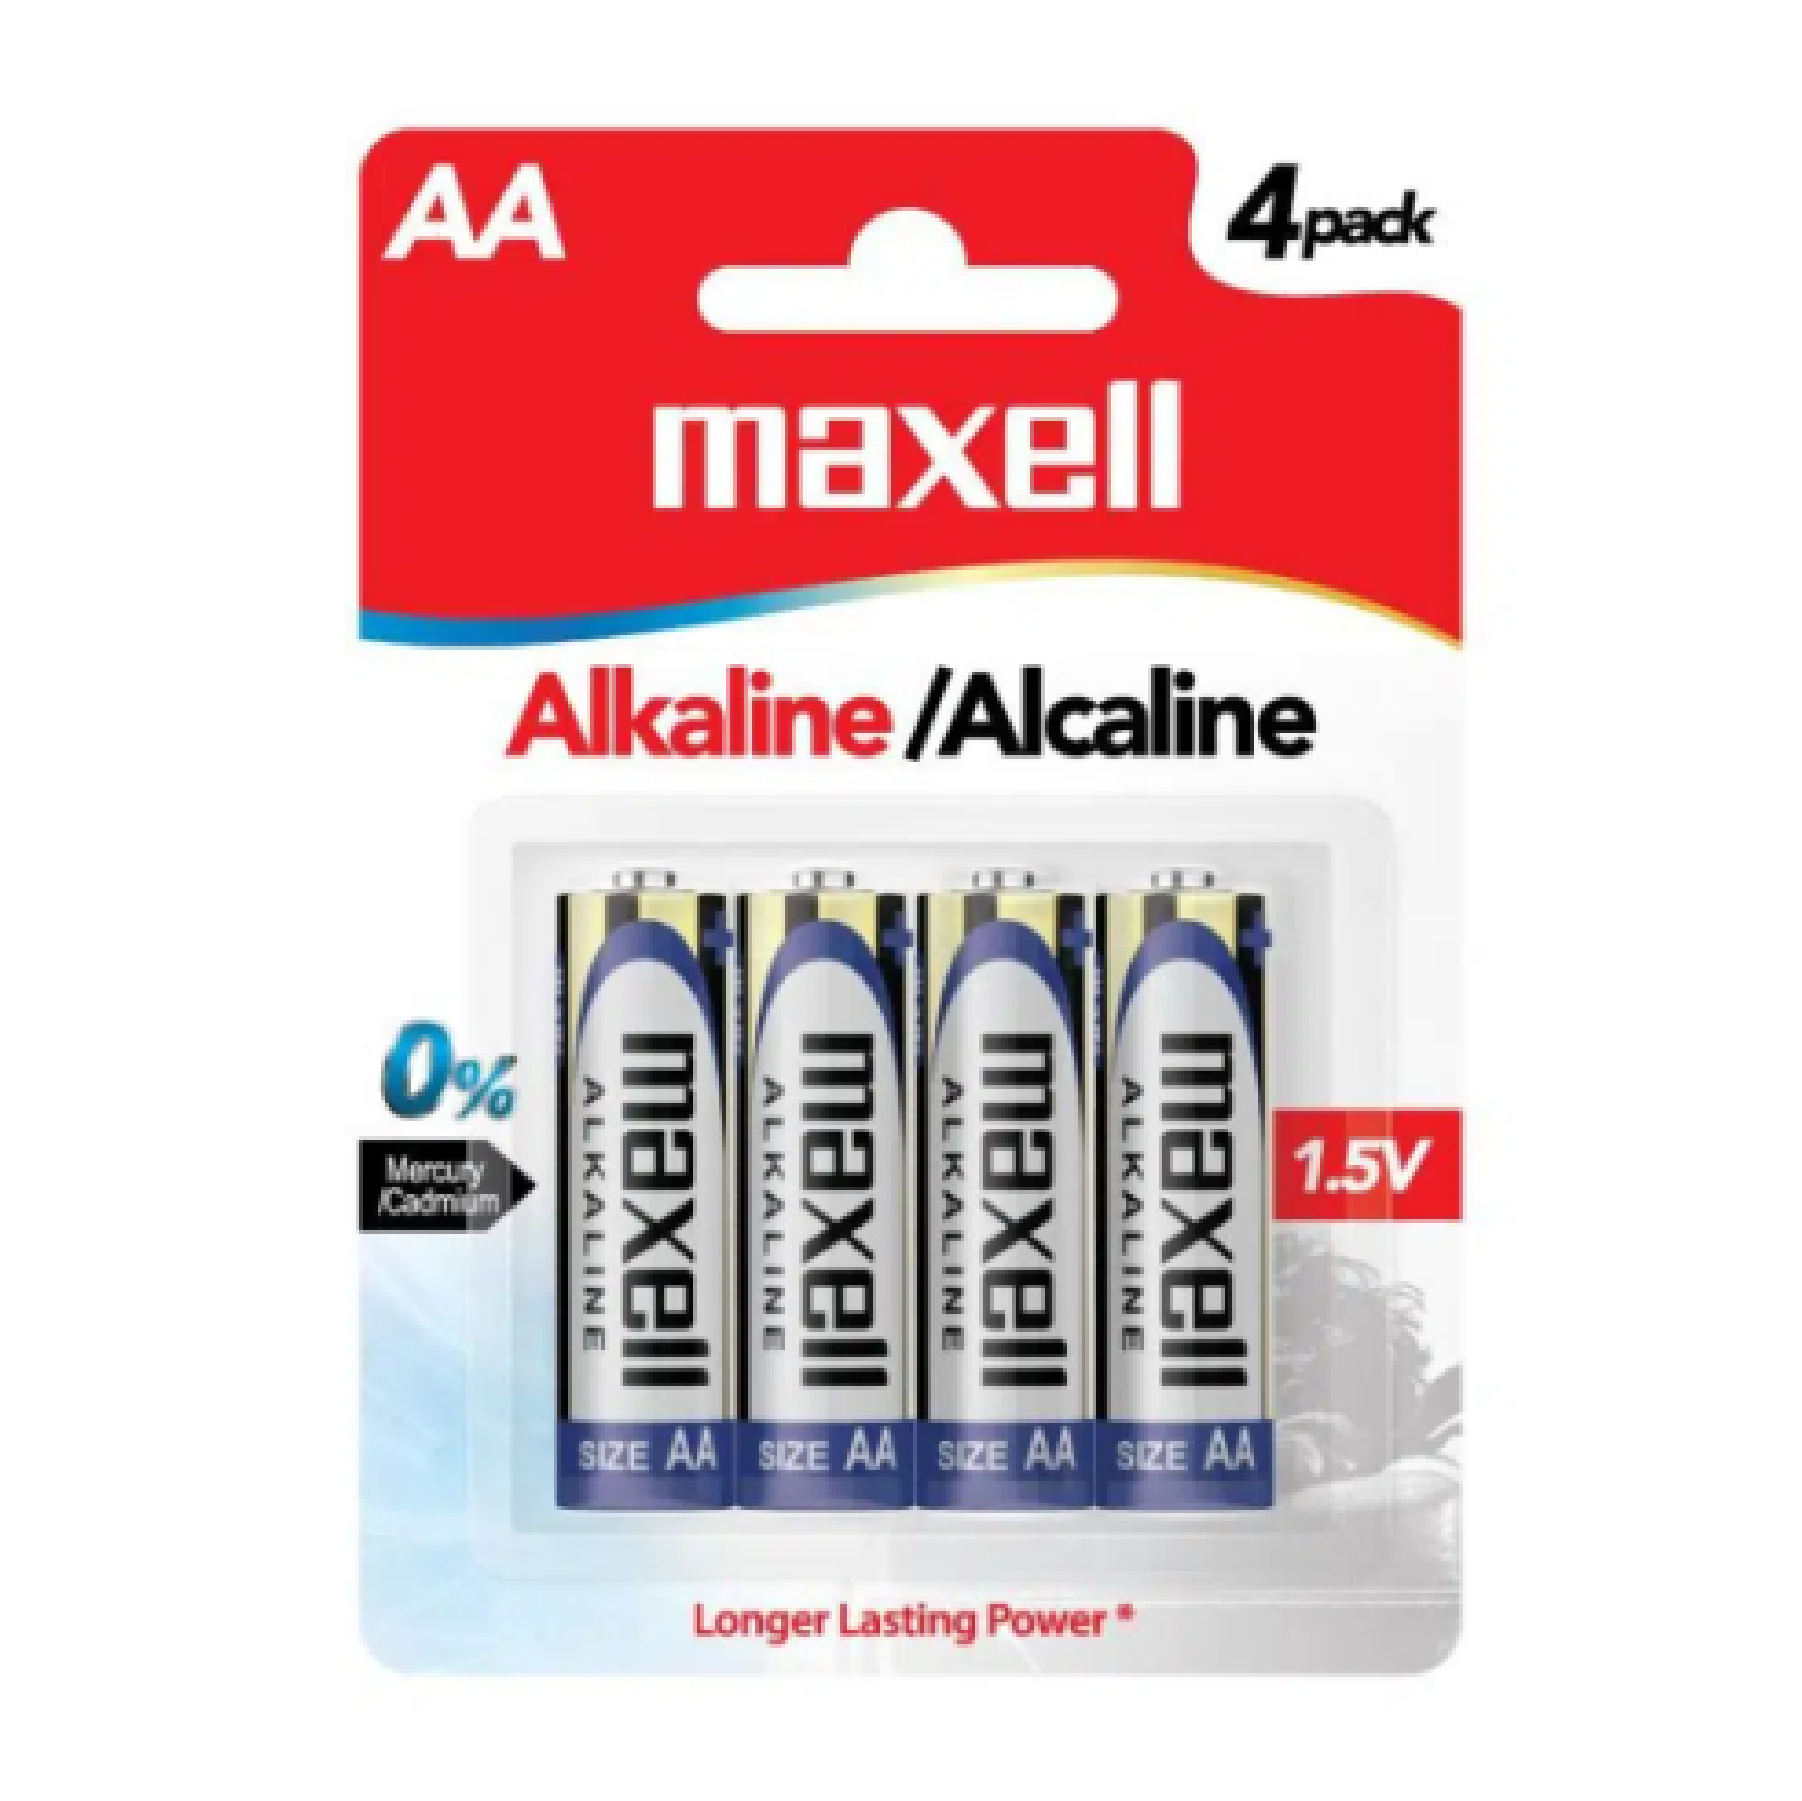 MAXELL AA Alkaline Battery 4PC/PACK 1.5V Long Lasting